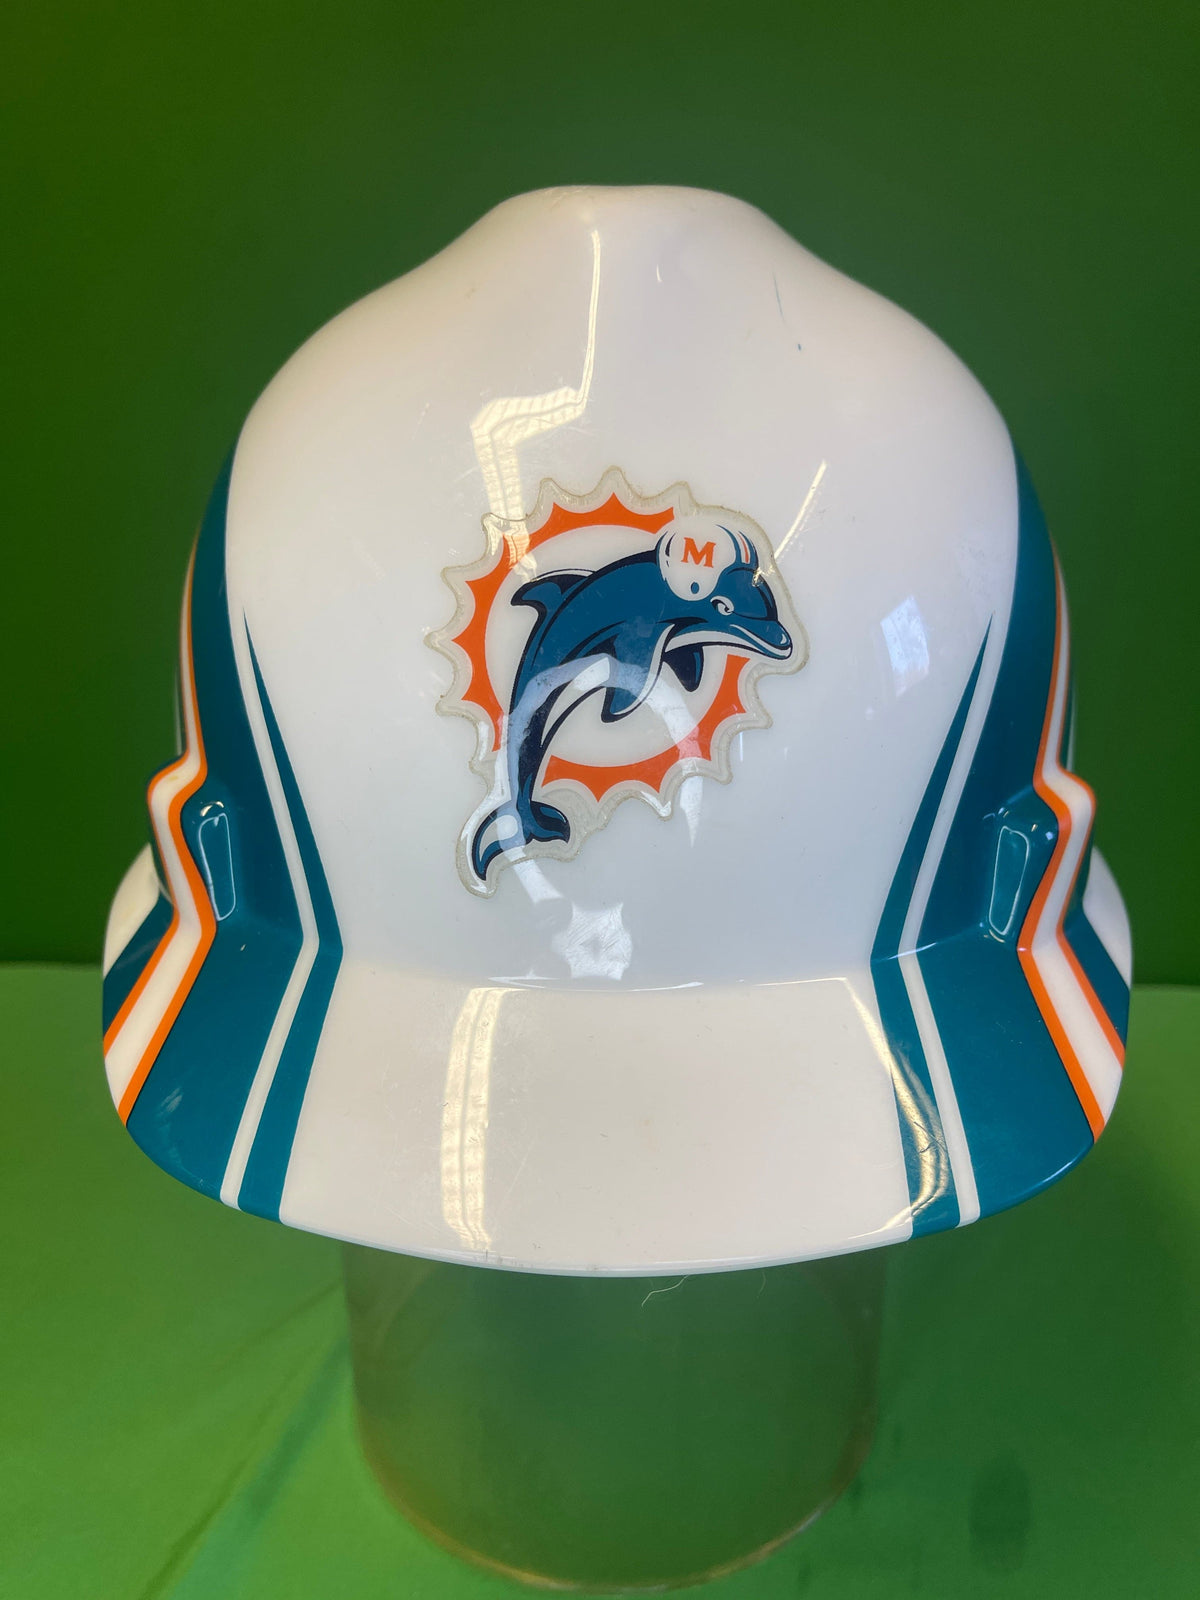 NFL Miami Dolphins MSA Certified Construction Hard Hat Size Medium